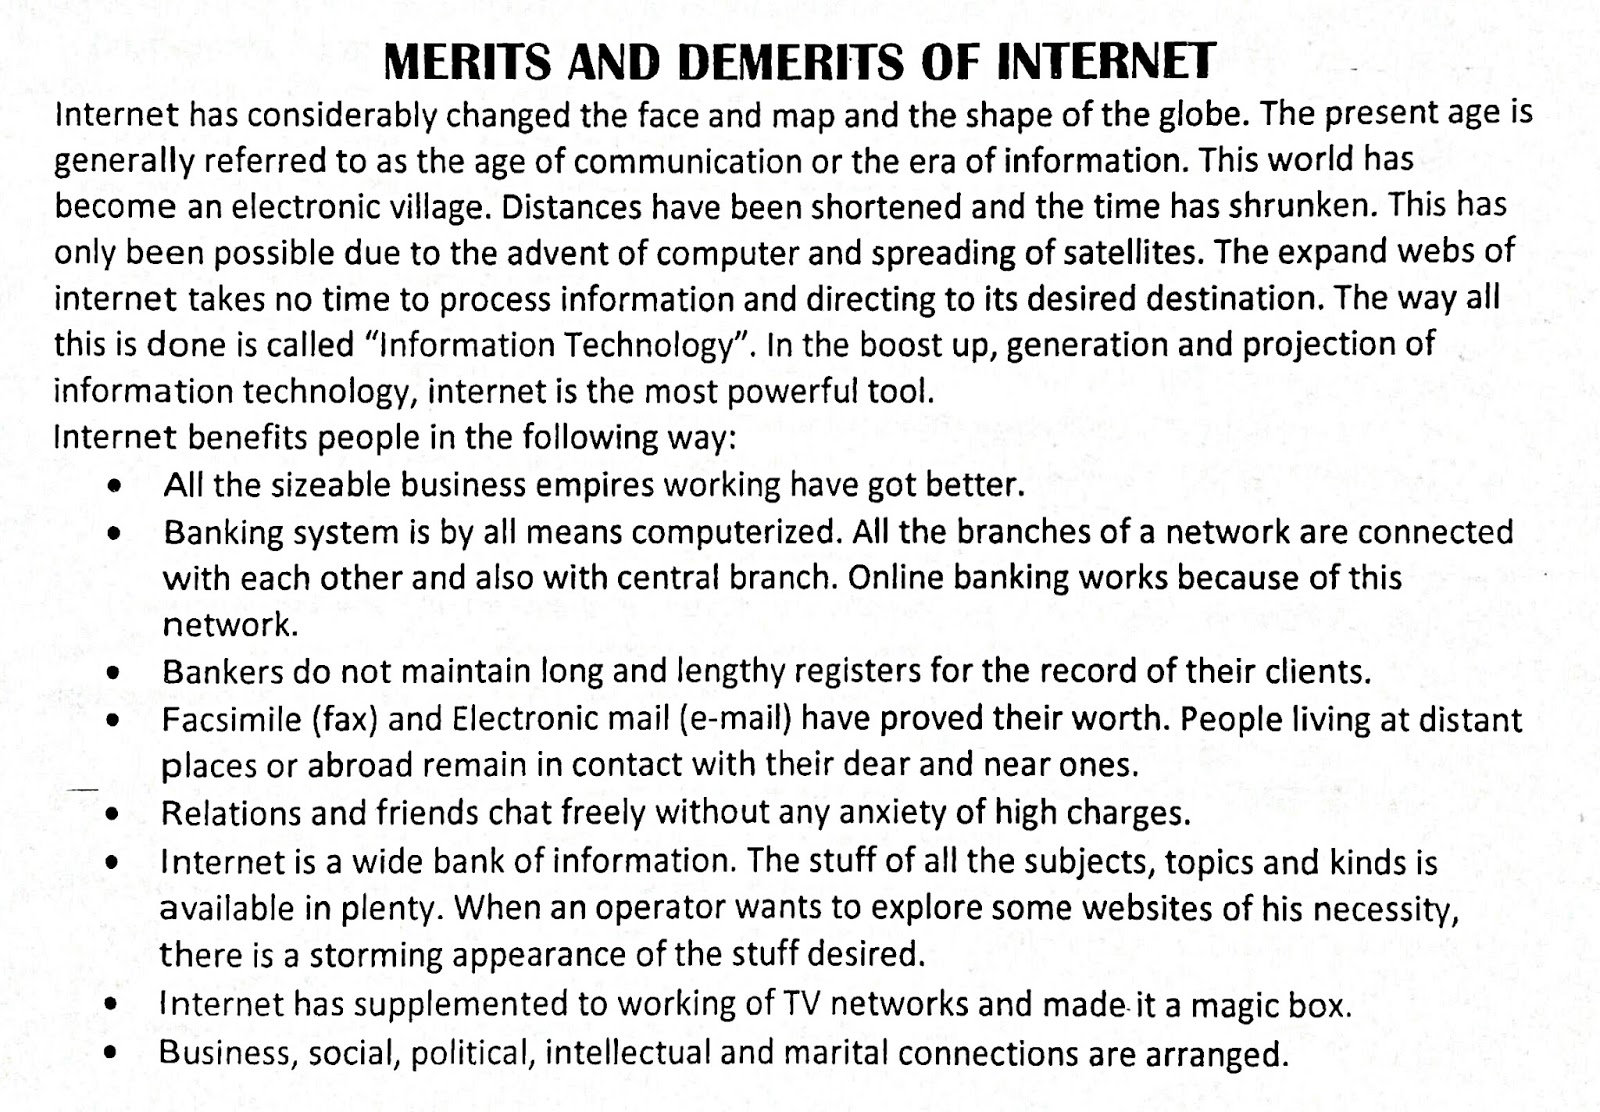 essay on internet merits and demerits